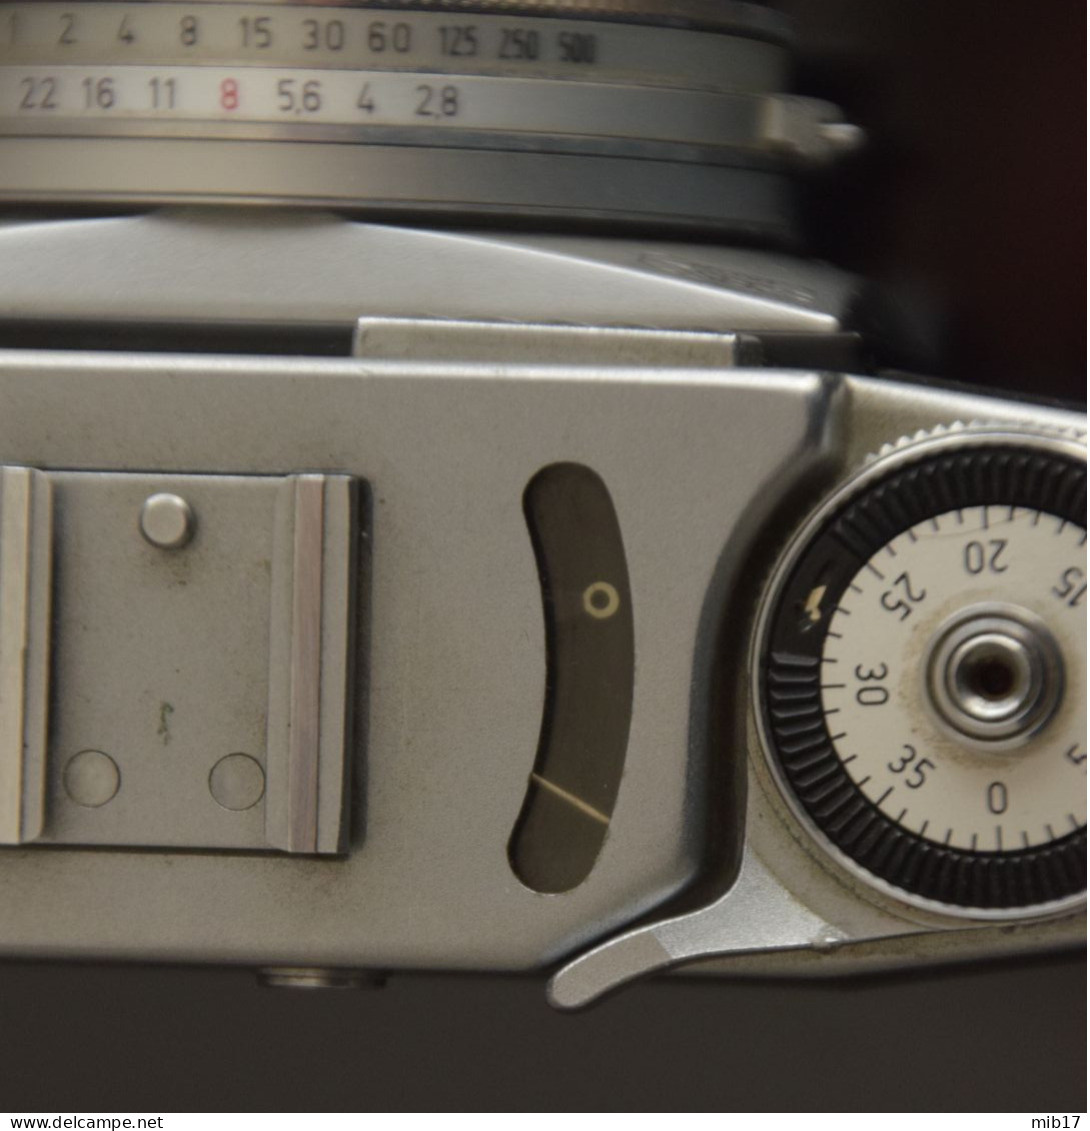 ancien appareil photo ZEISS IKON - Contina matic III avec objectif Pantar 1:4 f 75mm -film 135 24x36